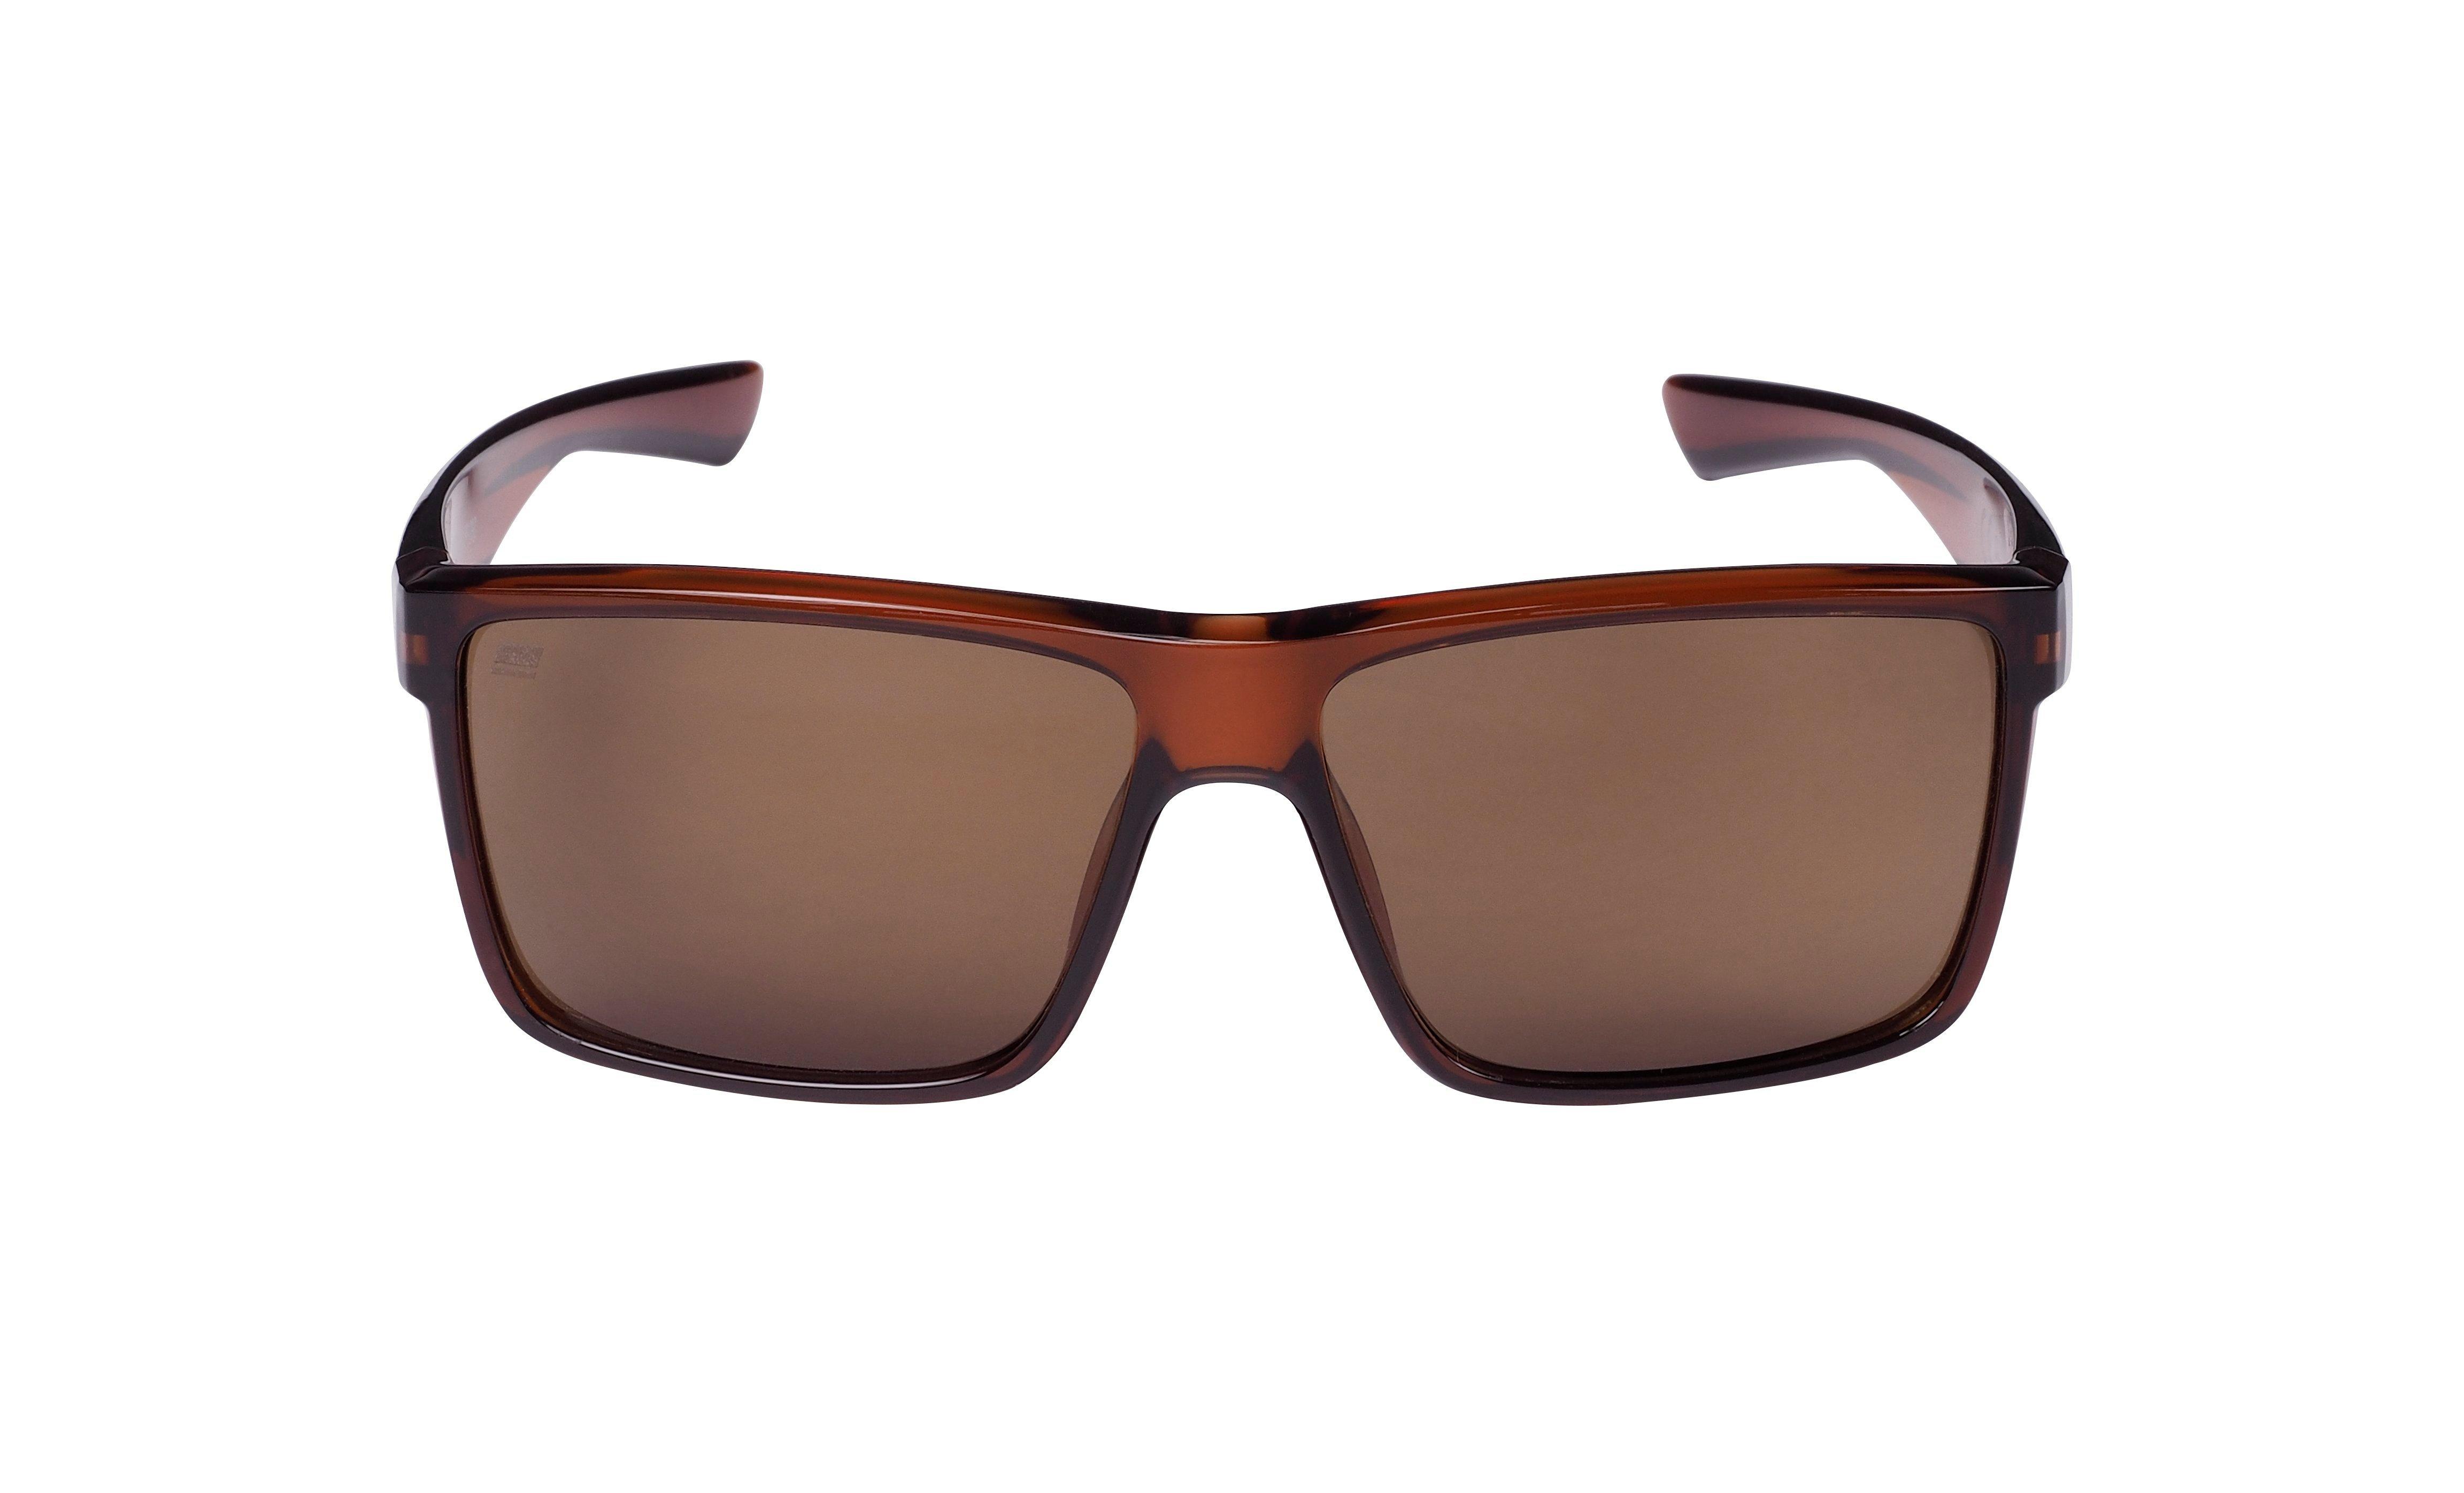 Abu Garcia Spike Eyewear Polarized Sunglasses - Quartz Brown